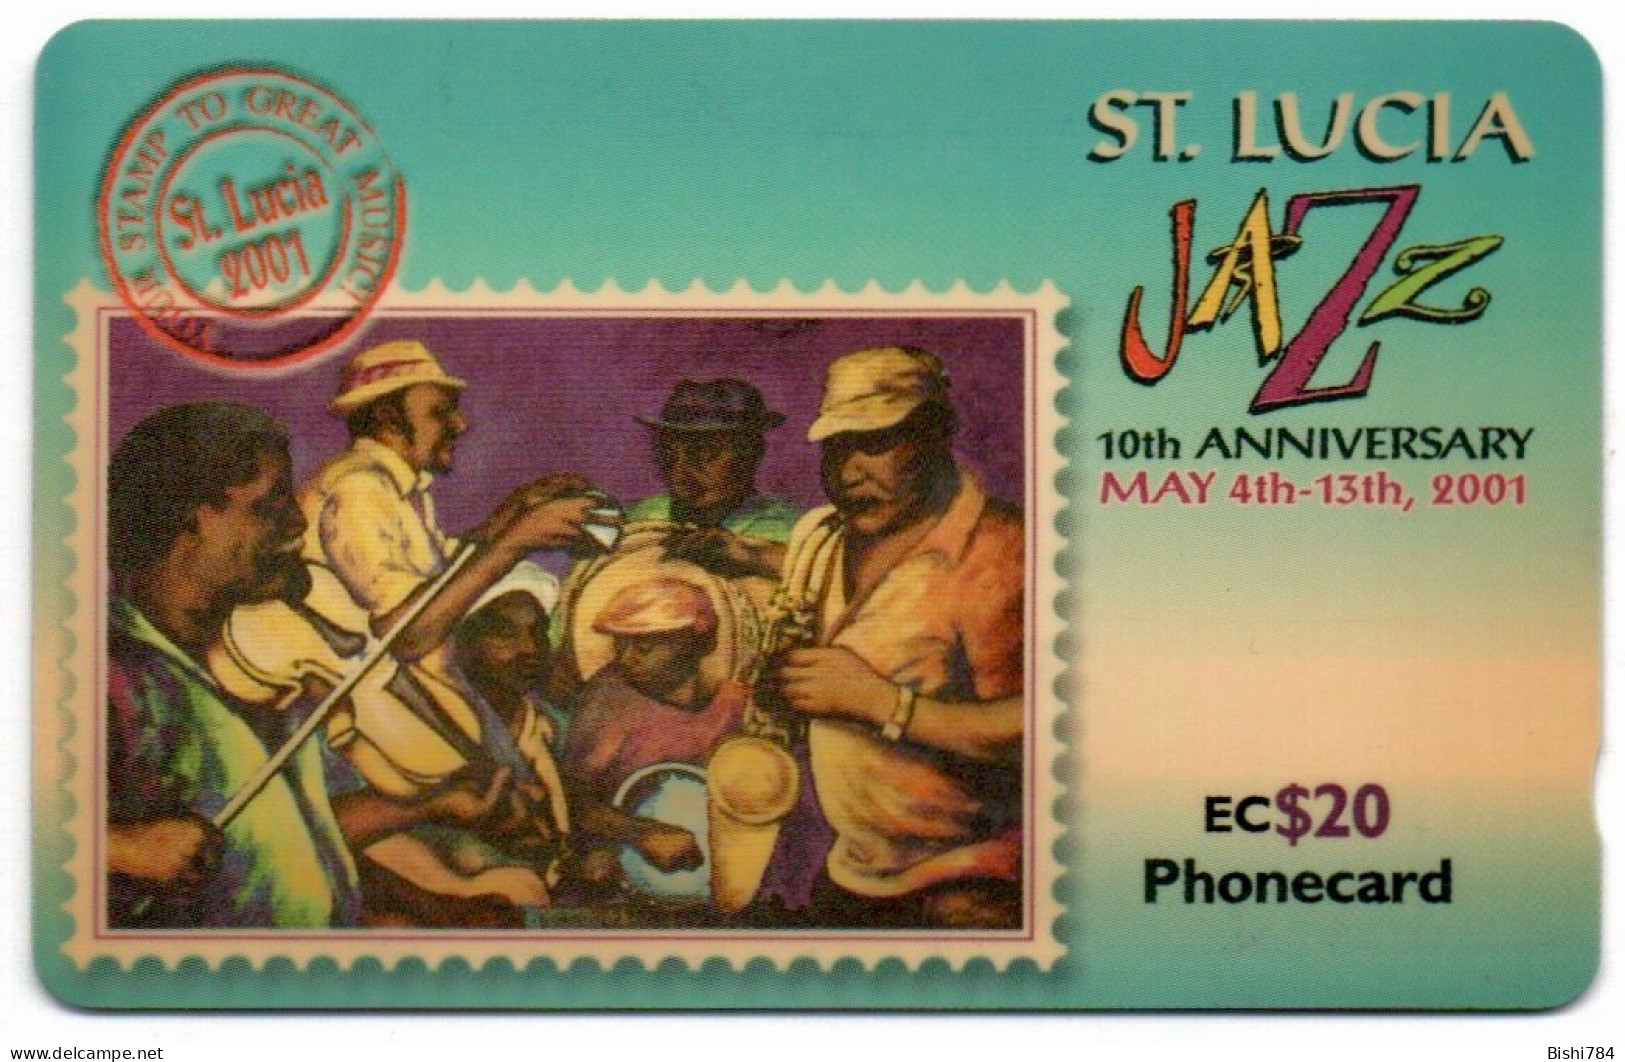 St. Lucia - Jazz Festival 2001 - 337CSLJ - Santa Lucía